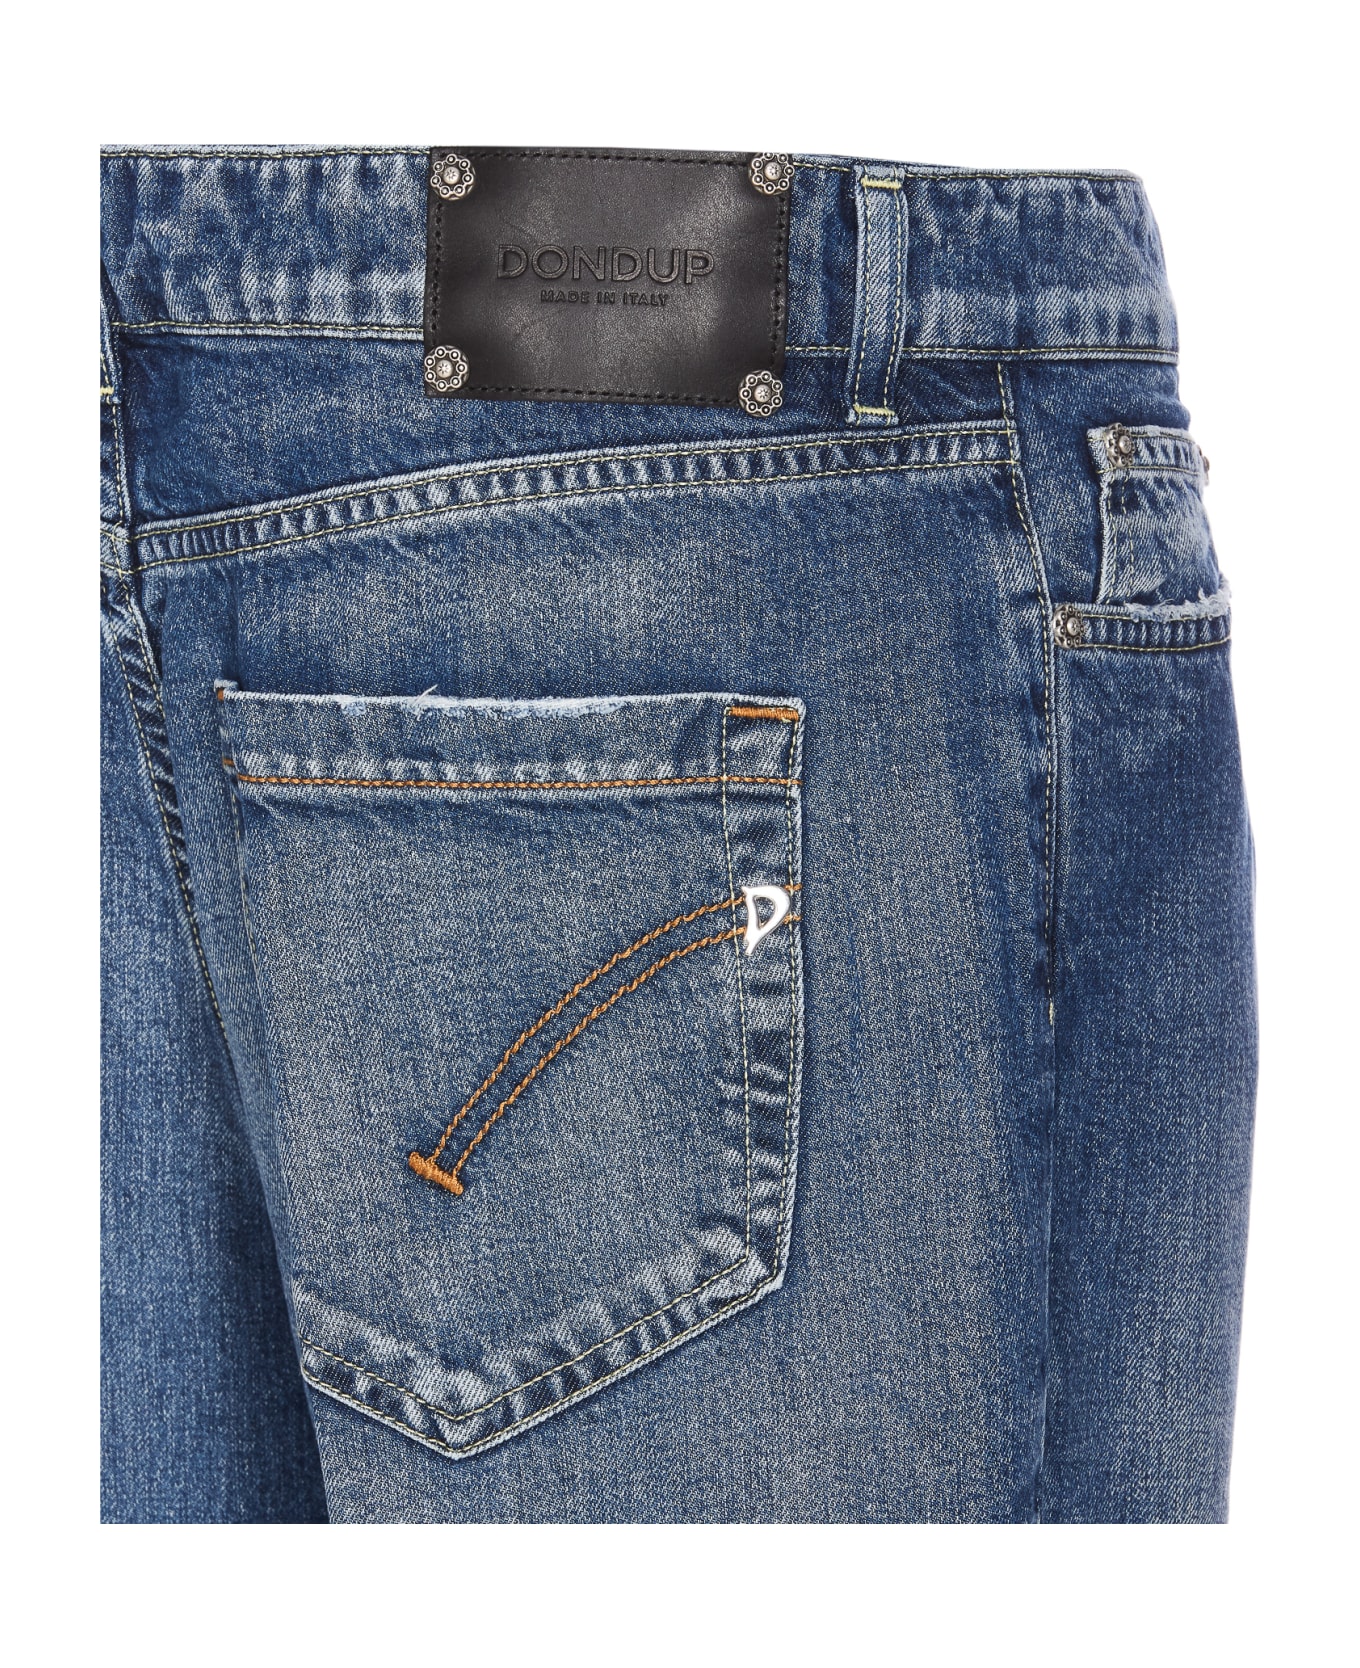 Dondup Koons Gioiello Denim Jeans Pants - BLU